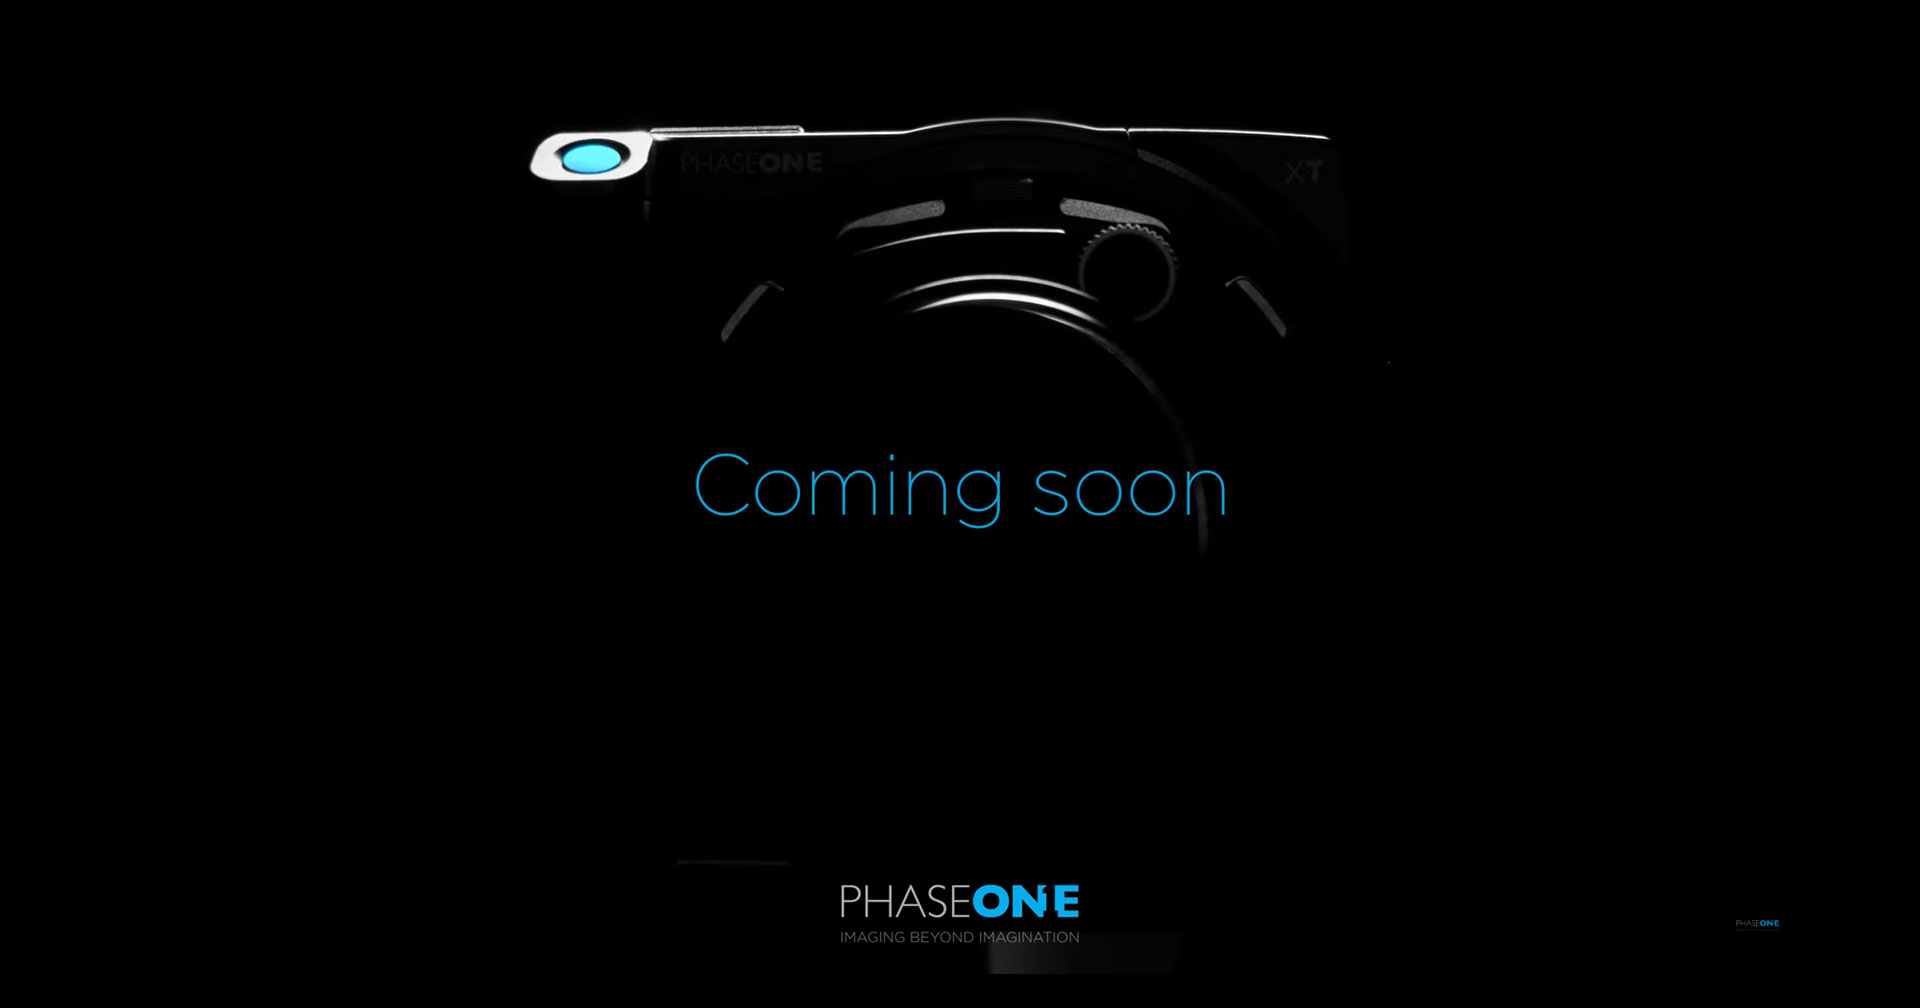 Phase One ปล่อยตัวอย่างกล้องมีเดียมฟอร์แมตซีรีส์ XT รุ่นใหม่ ราคาหลักล้าน!